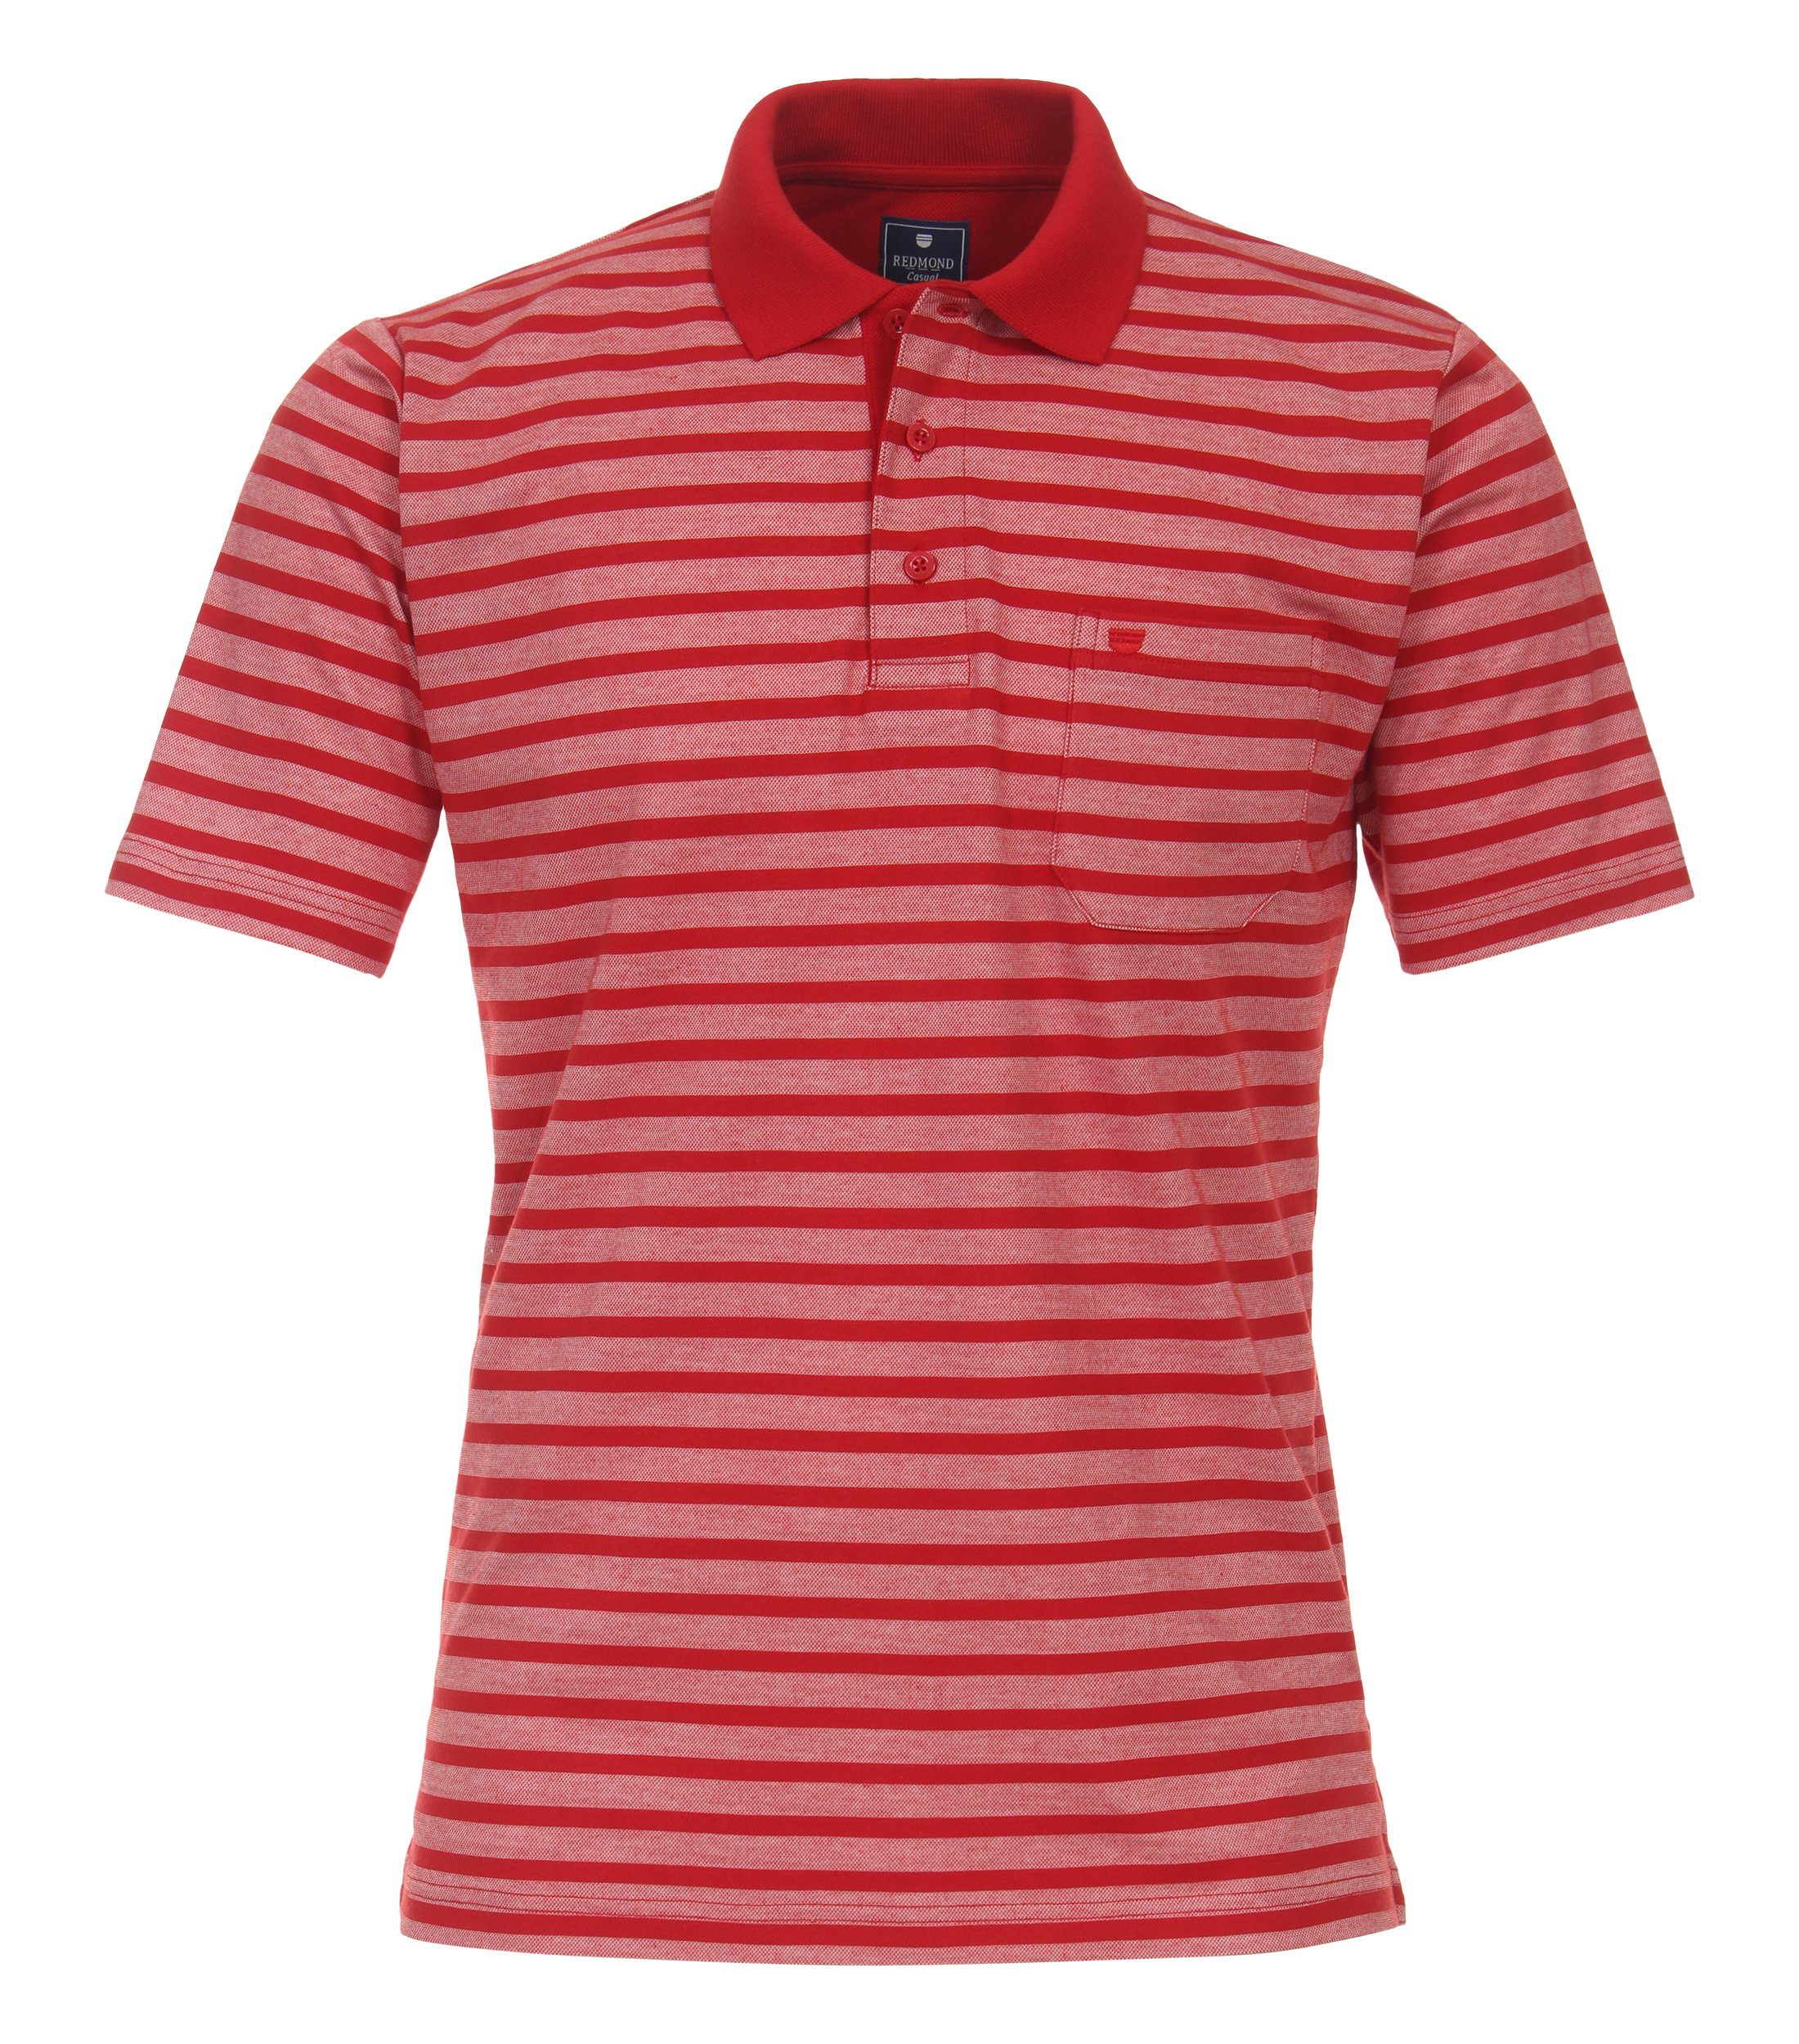 Redmond Poloshirt andere Muster 50 rot | Poloshirts